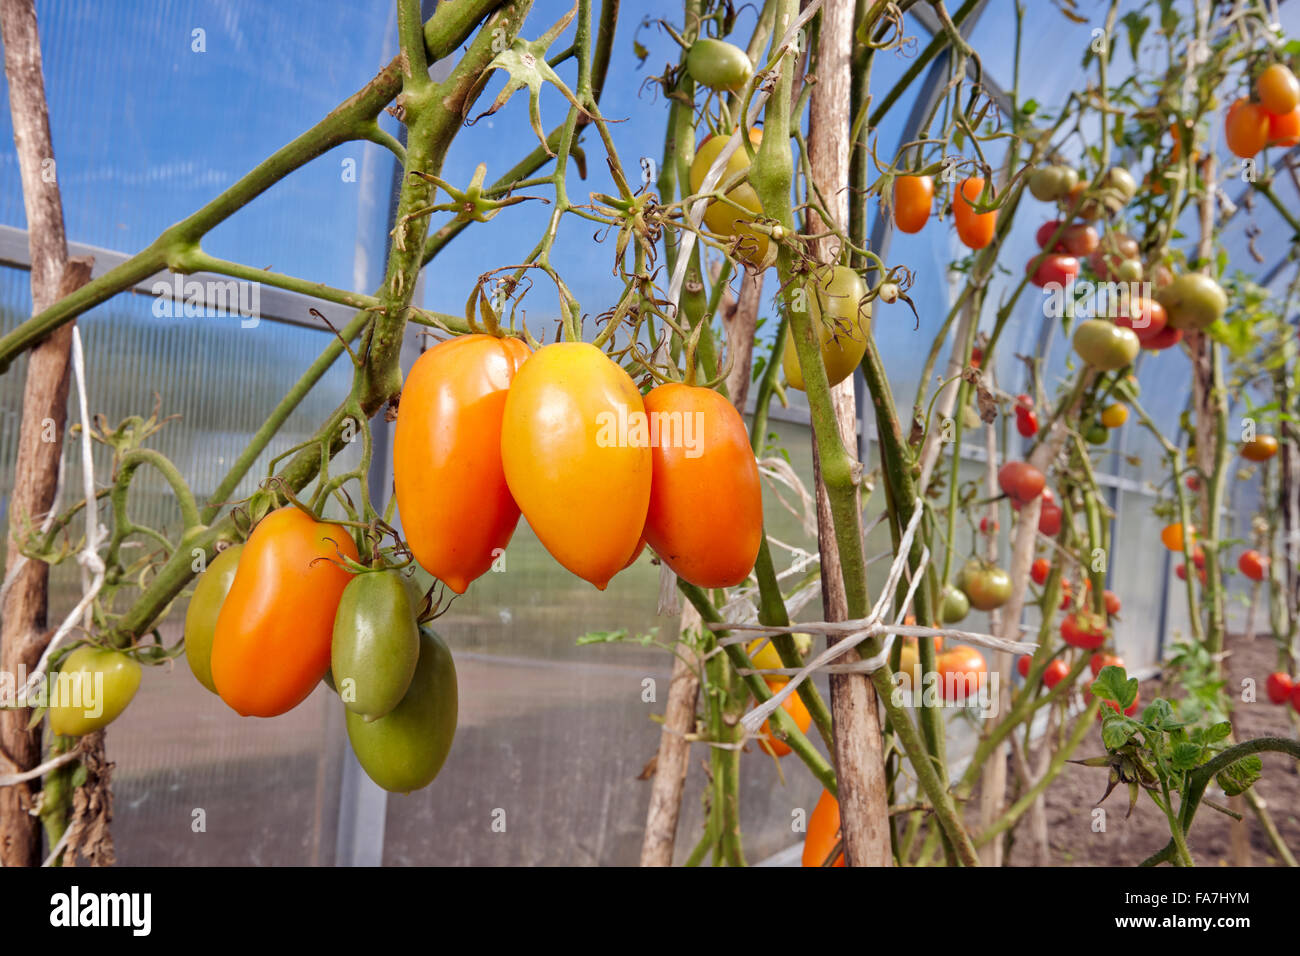 Yellow tomatoes growing in organic greenhouse. Scientific name: Solanum lycopersicum. Kaluga region, Russia. Stock Photo